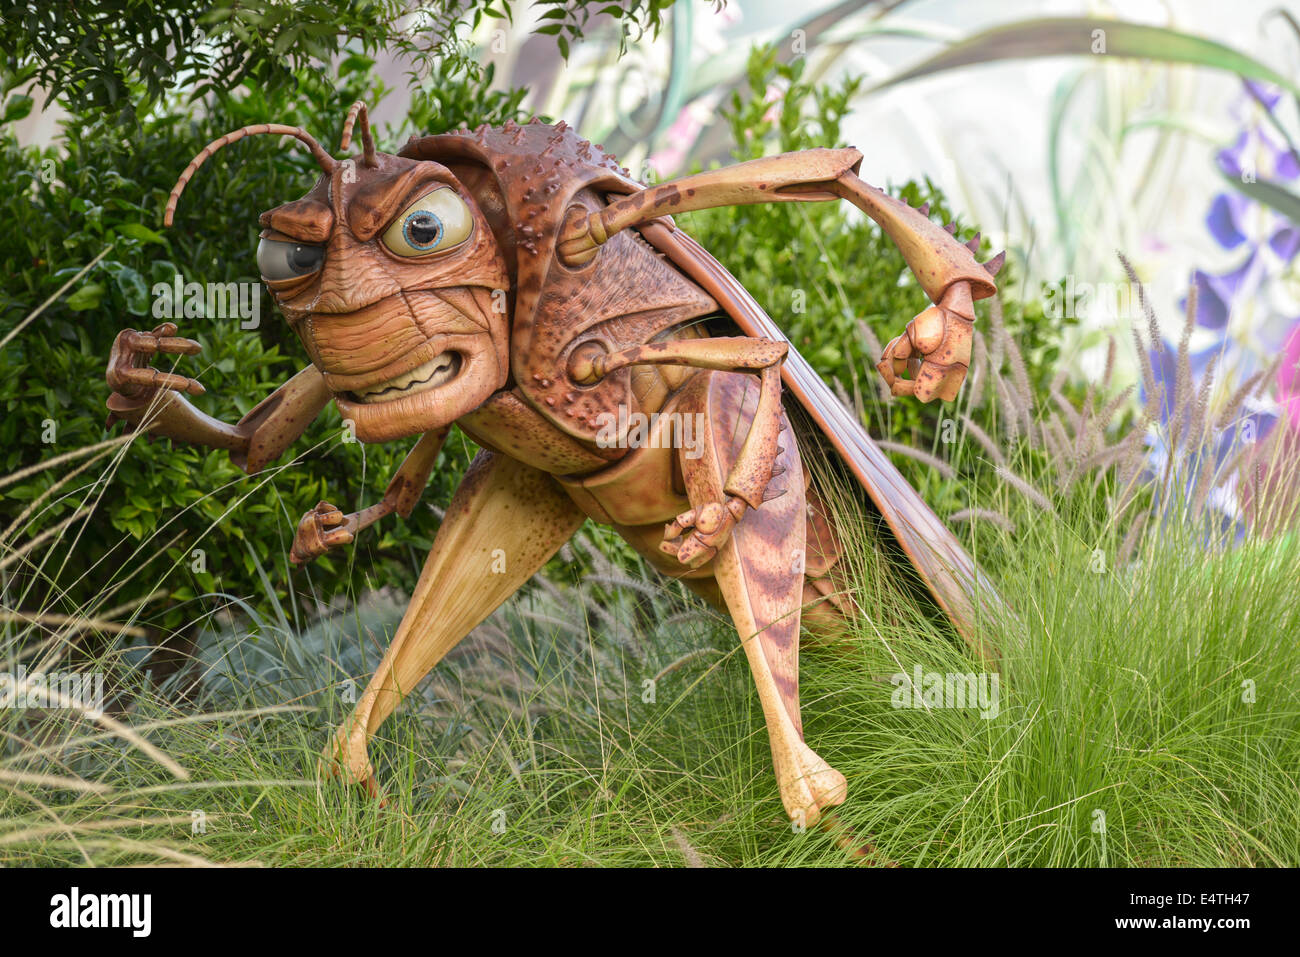 Hopper, Bug's Life character, Disneyland, Anaheim, California Stock Photo